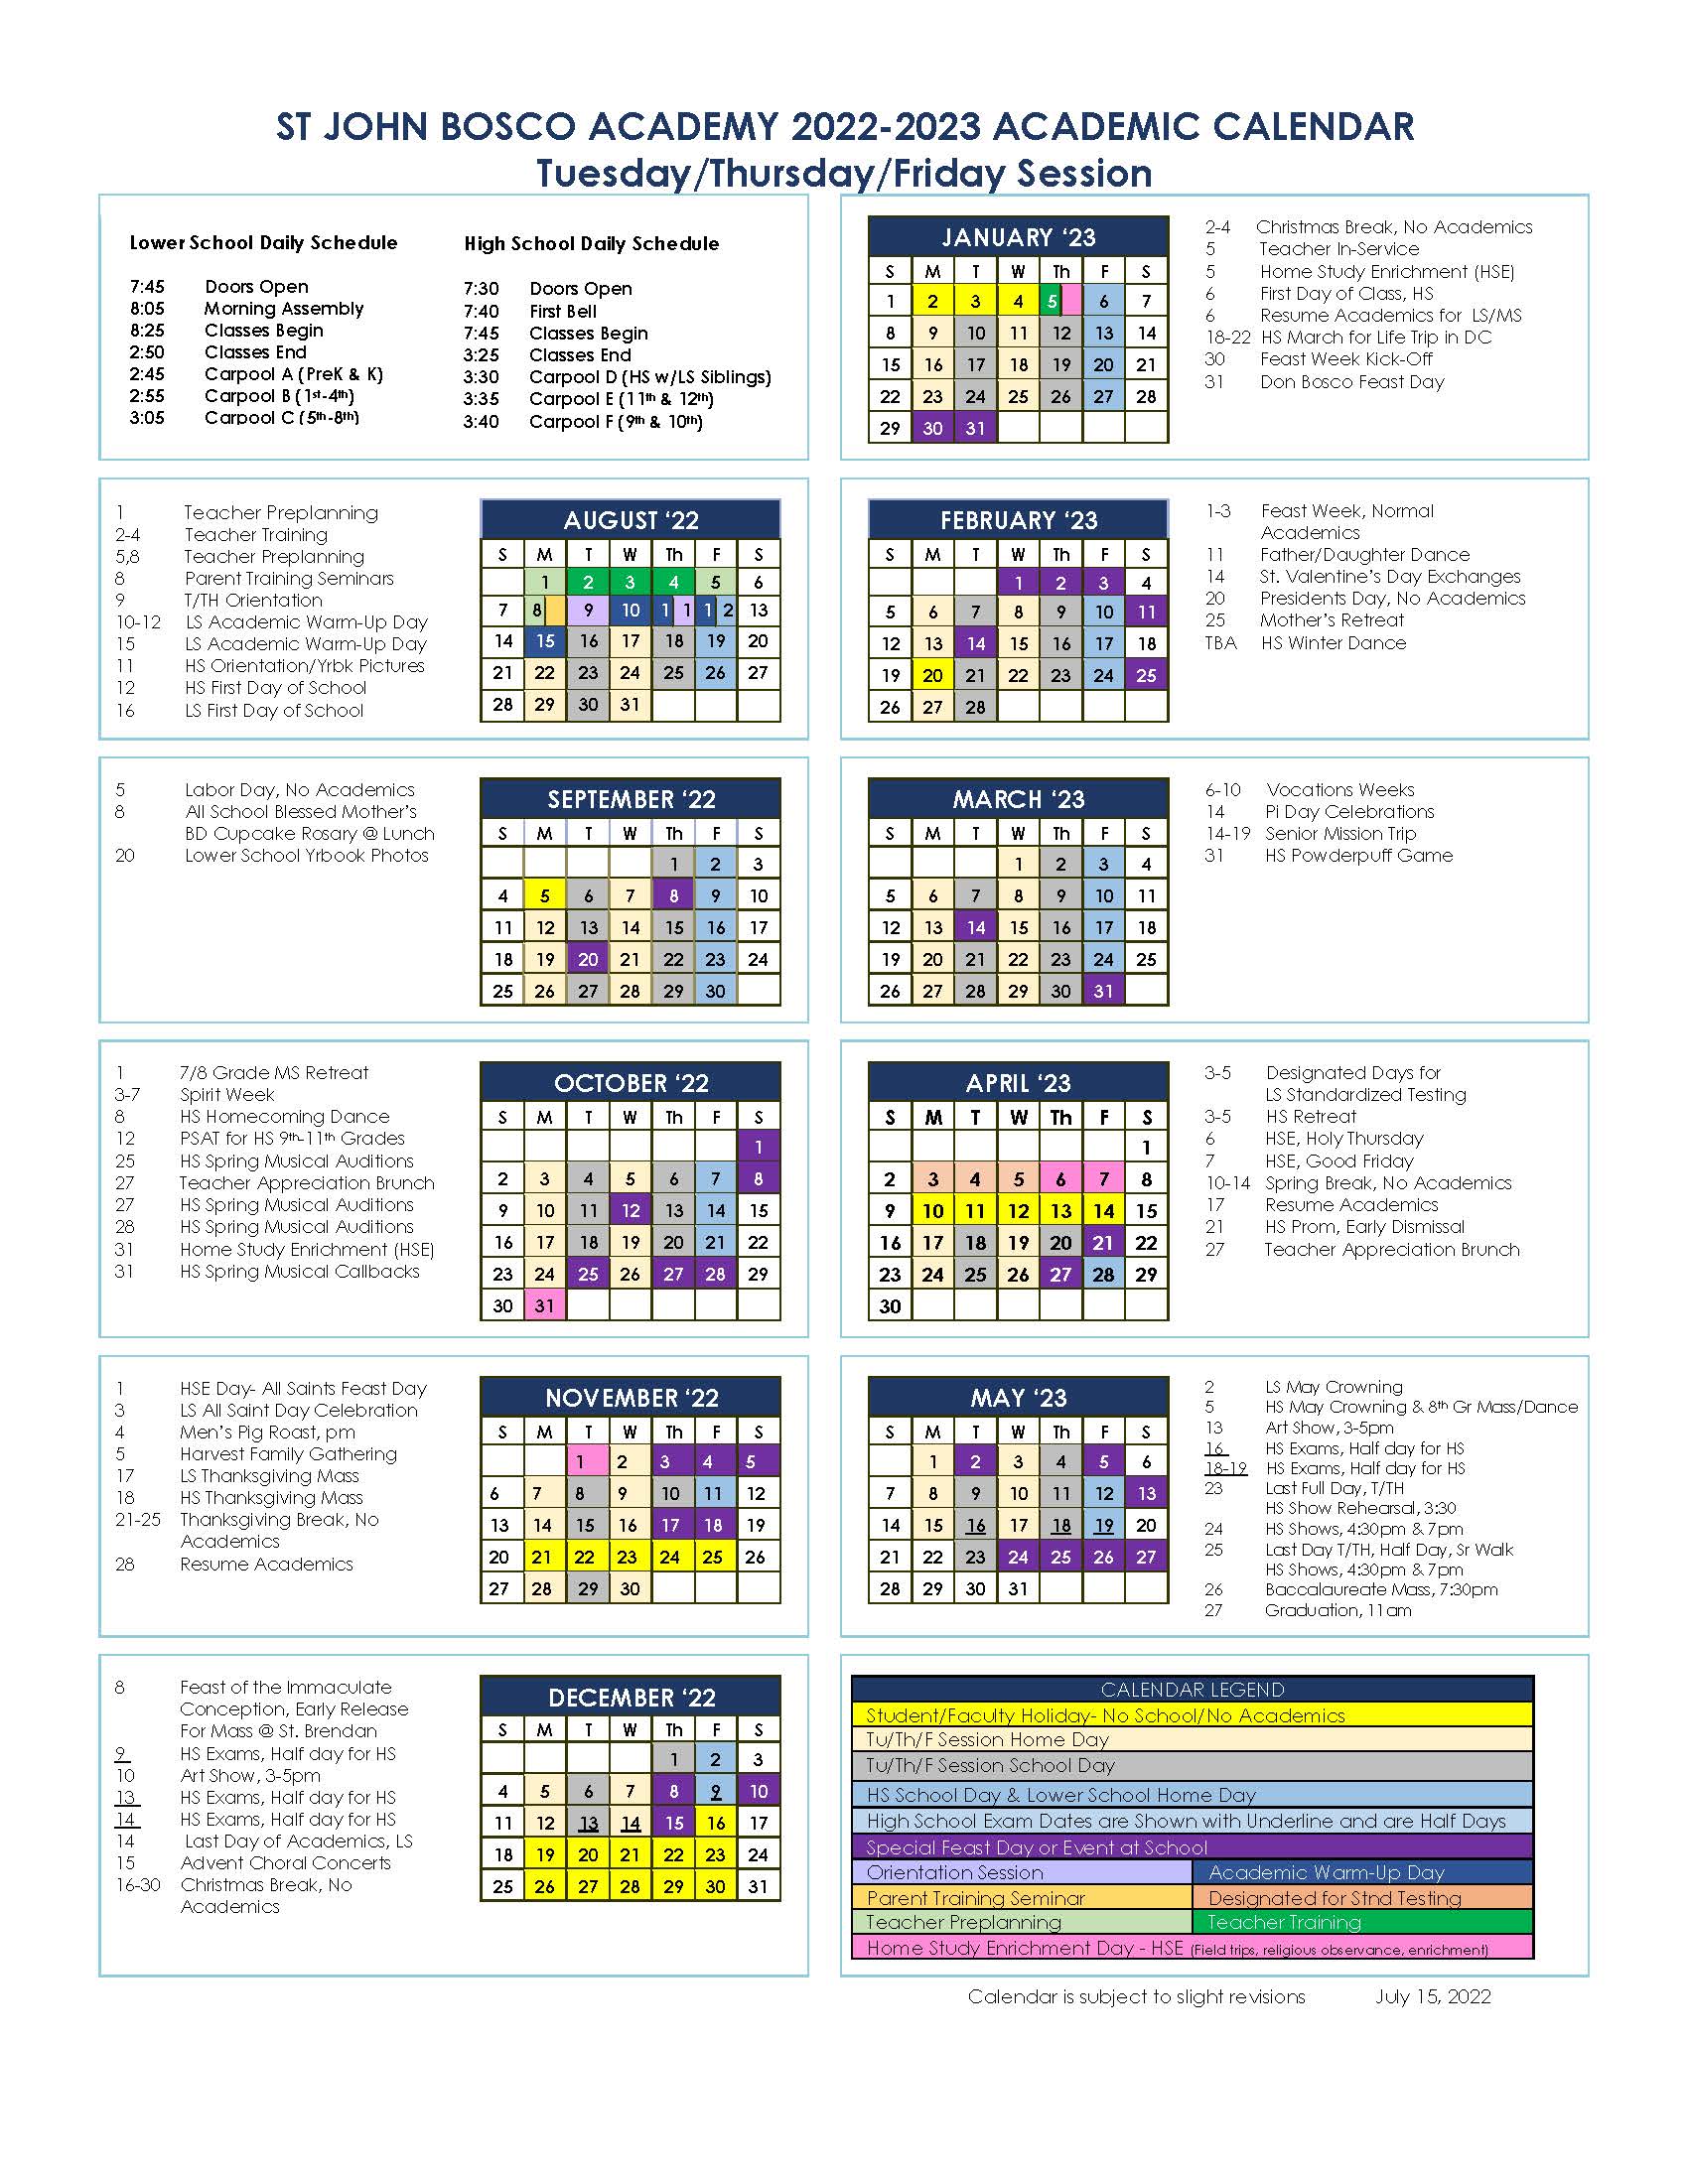 2022 2023 Academic Calendars St. John Bosco Academy